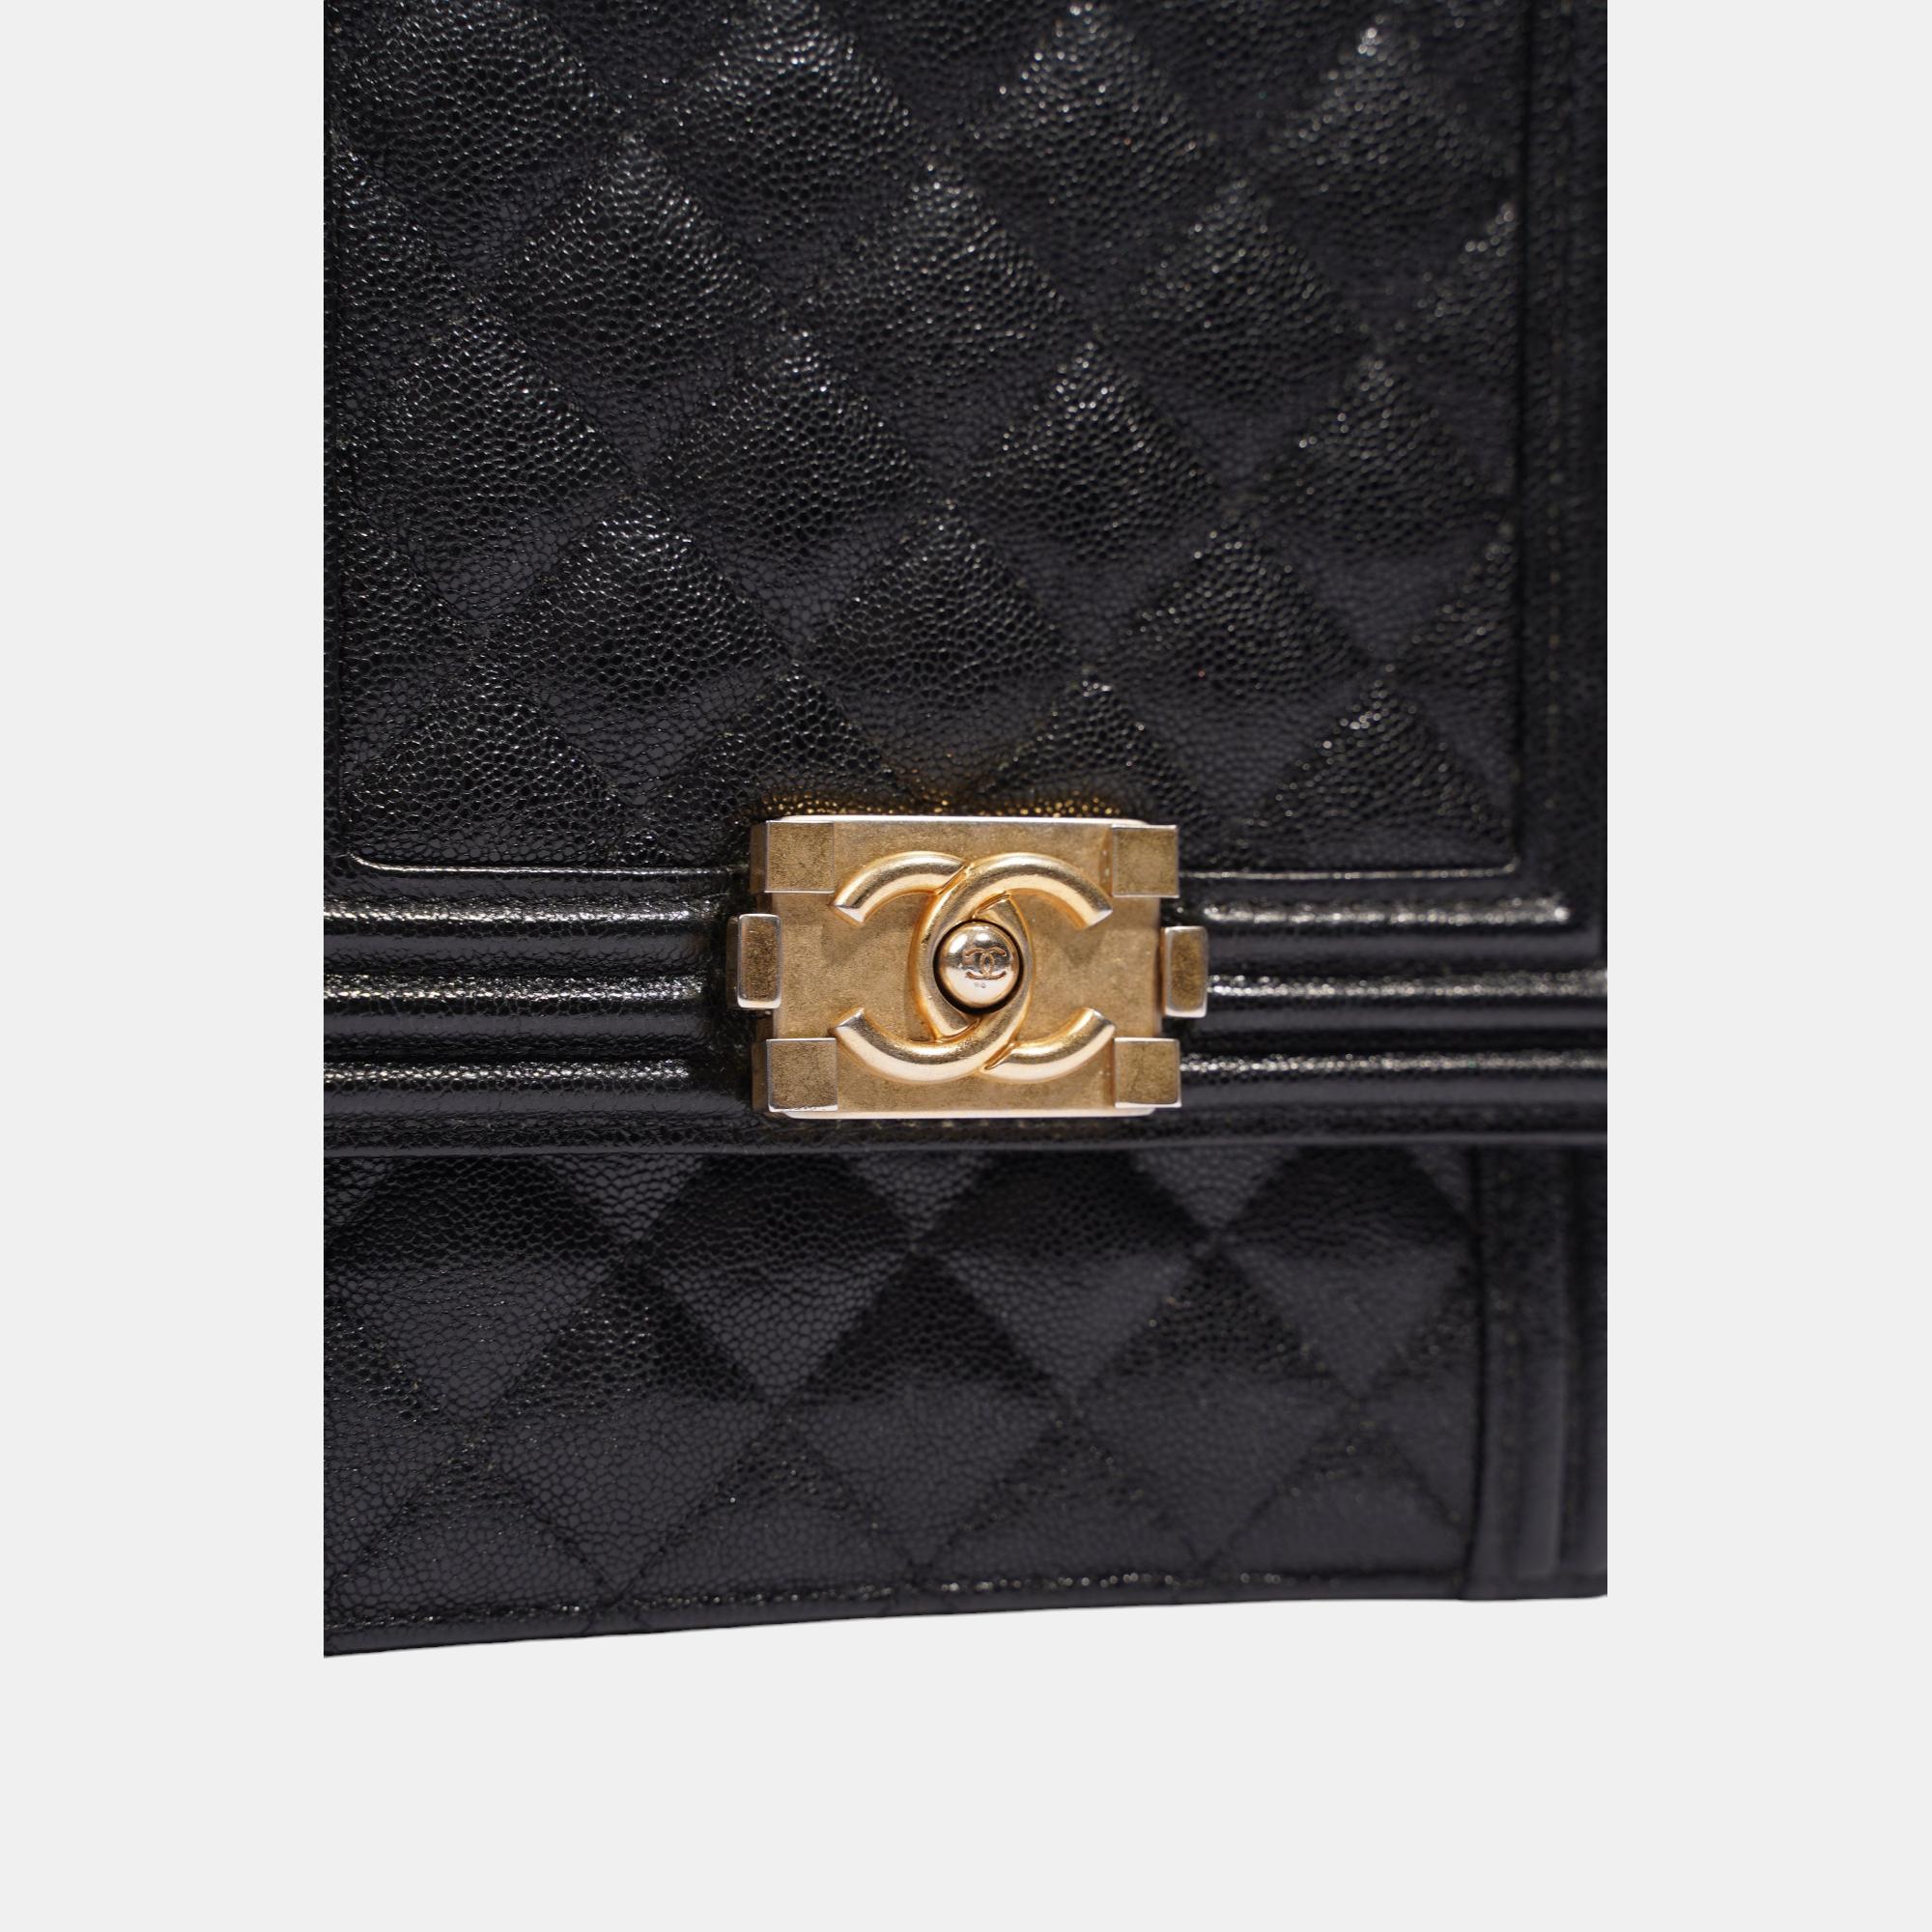 Chanel Womens North South Boy Bag Black Caviar Leather / Gold